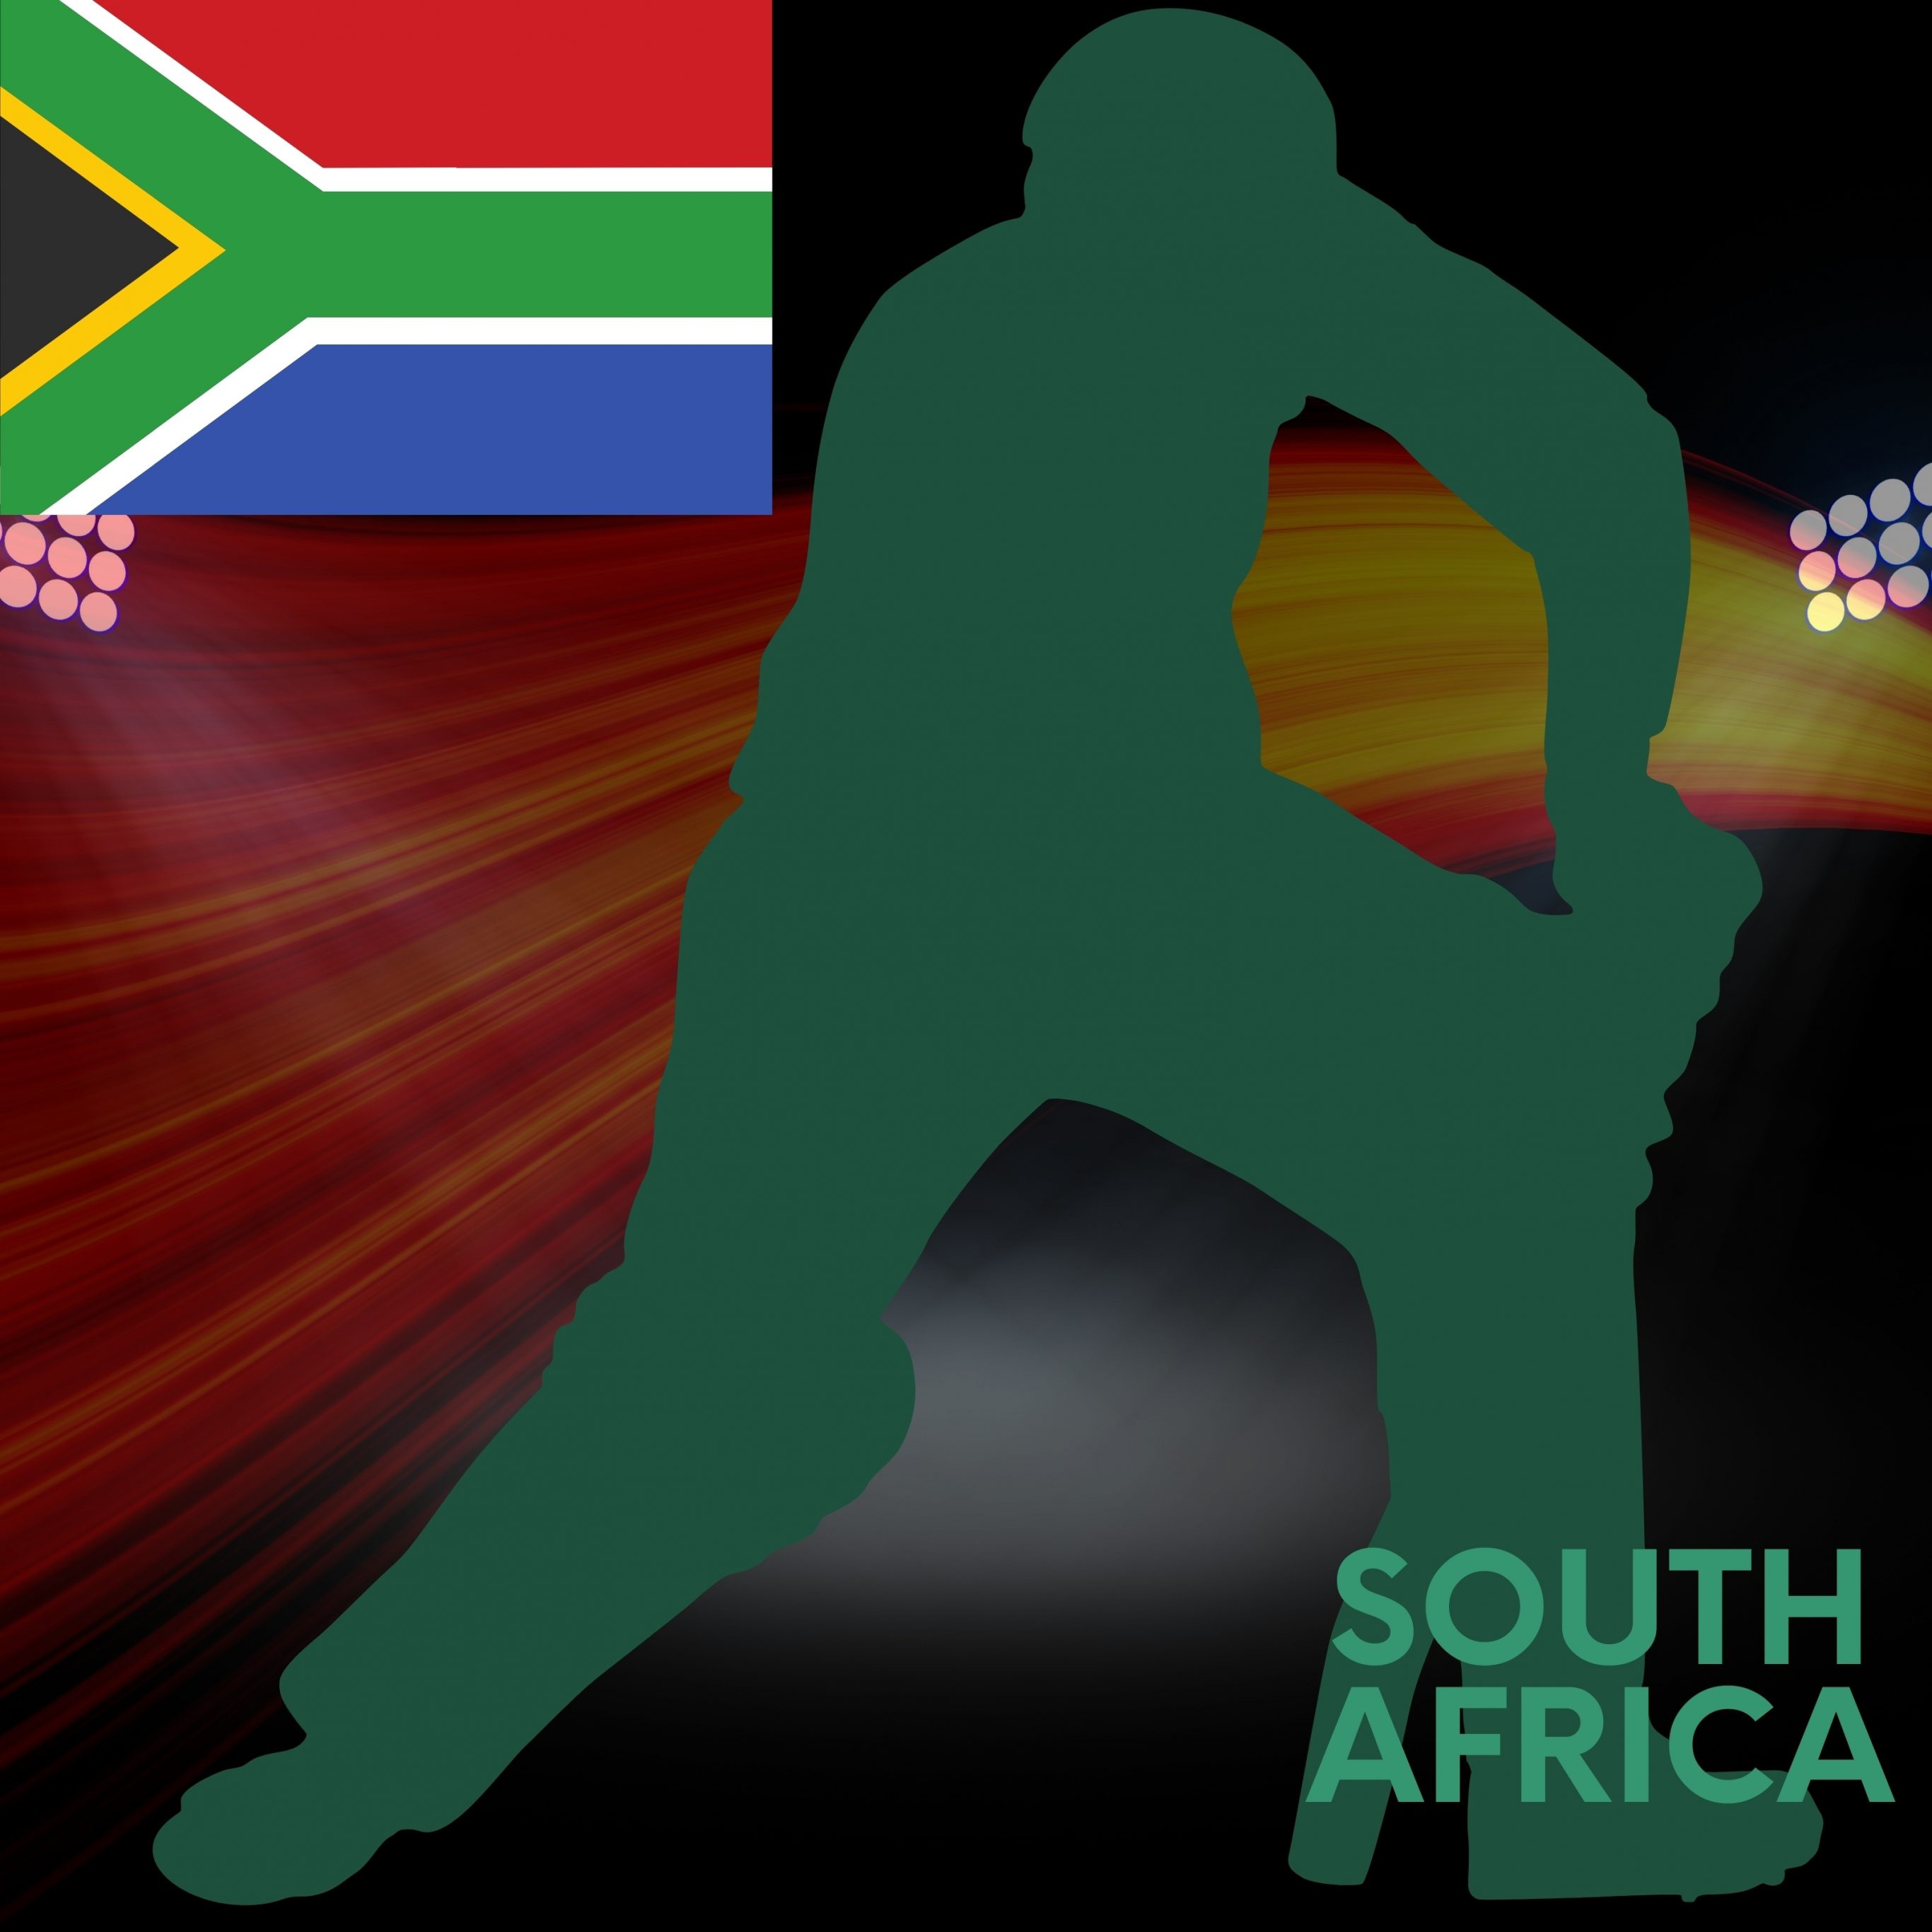 iPad Pro 12.9 wallpapers South Africa Cricket Stadium iPad Wallpaper